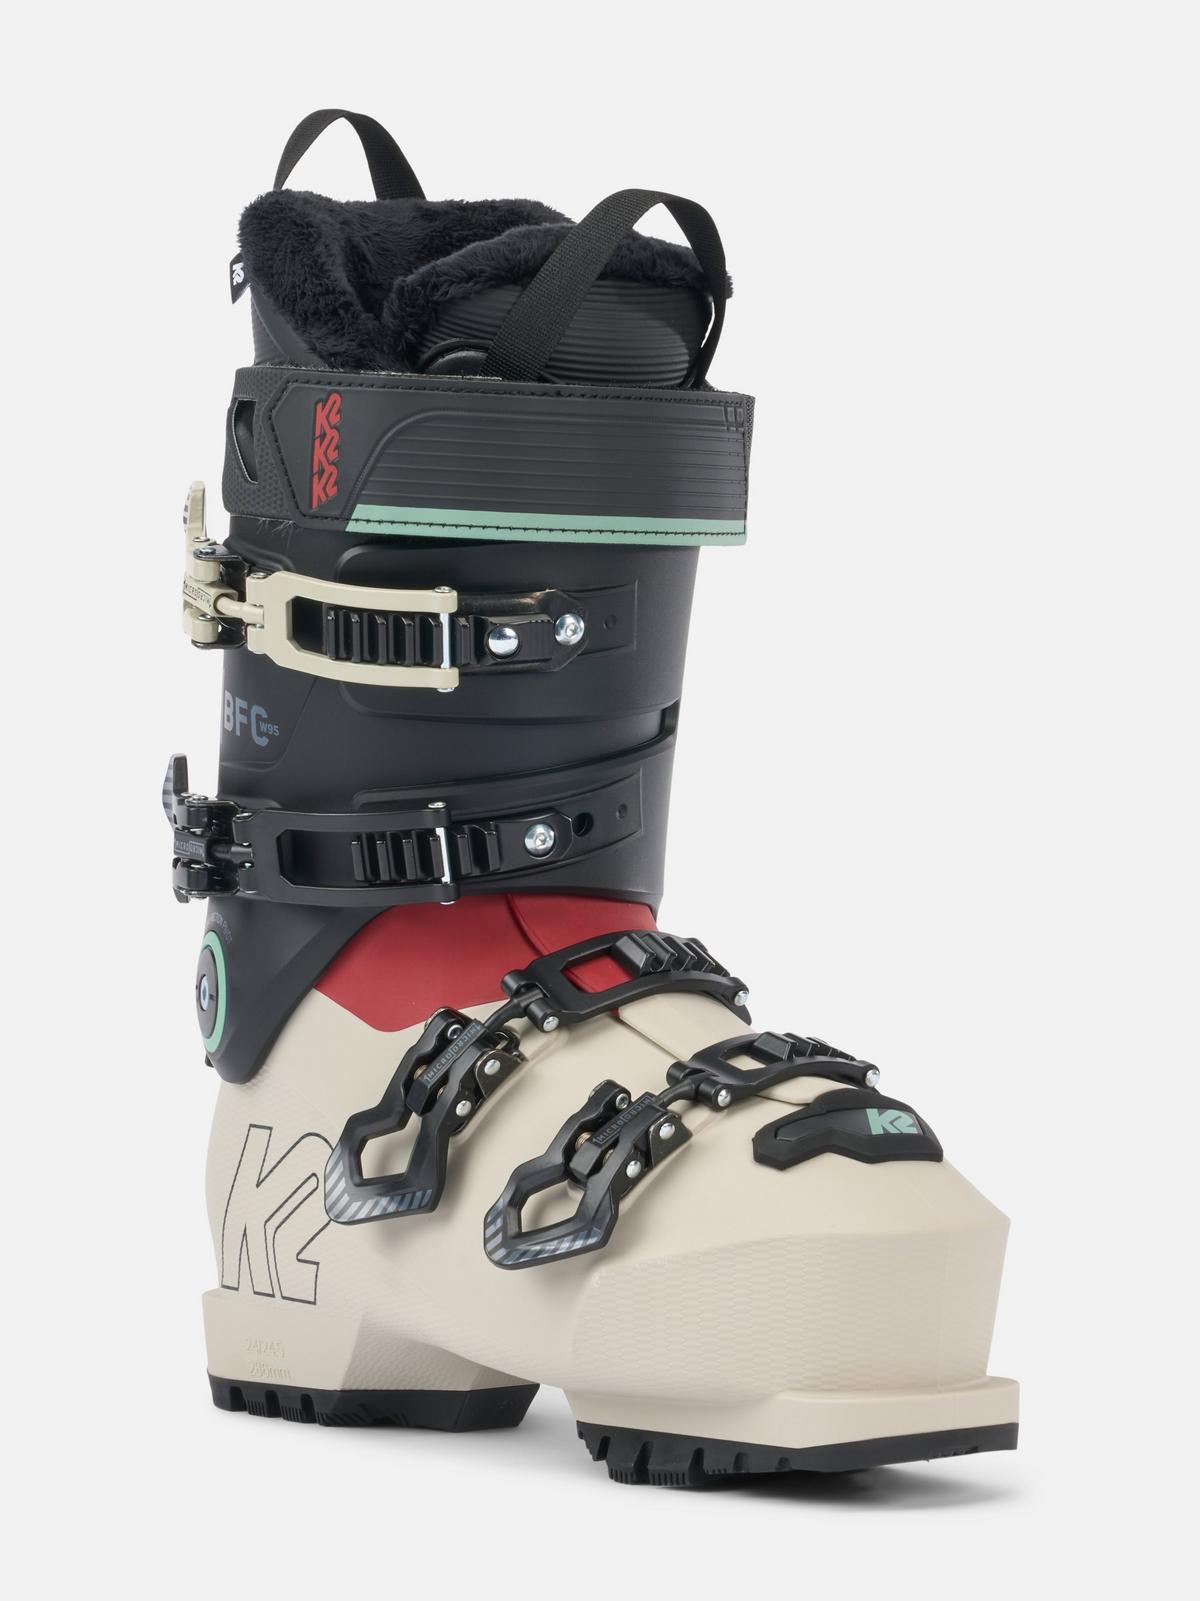 B.F.C. 90 Ski Boots | K2 Skis and K2 Snowboarding